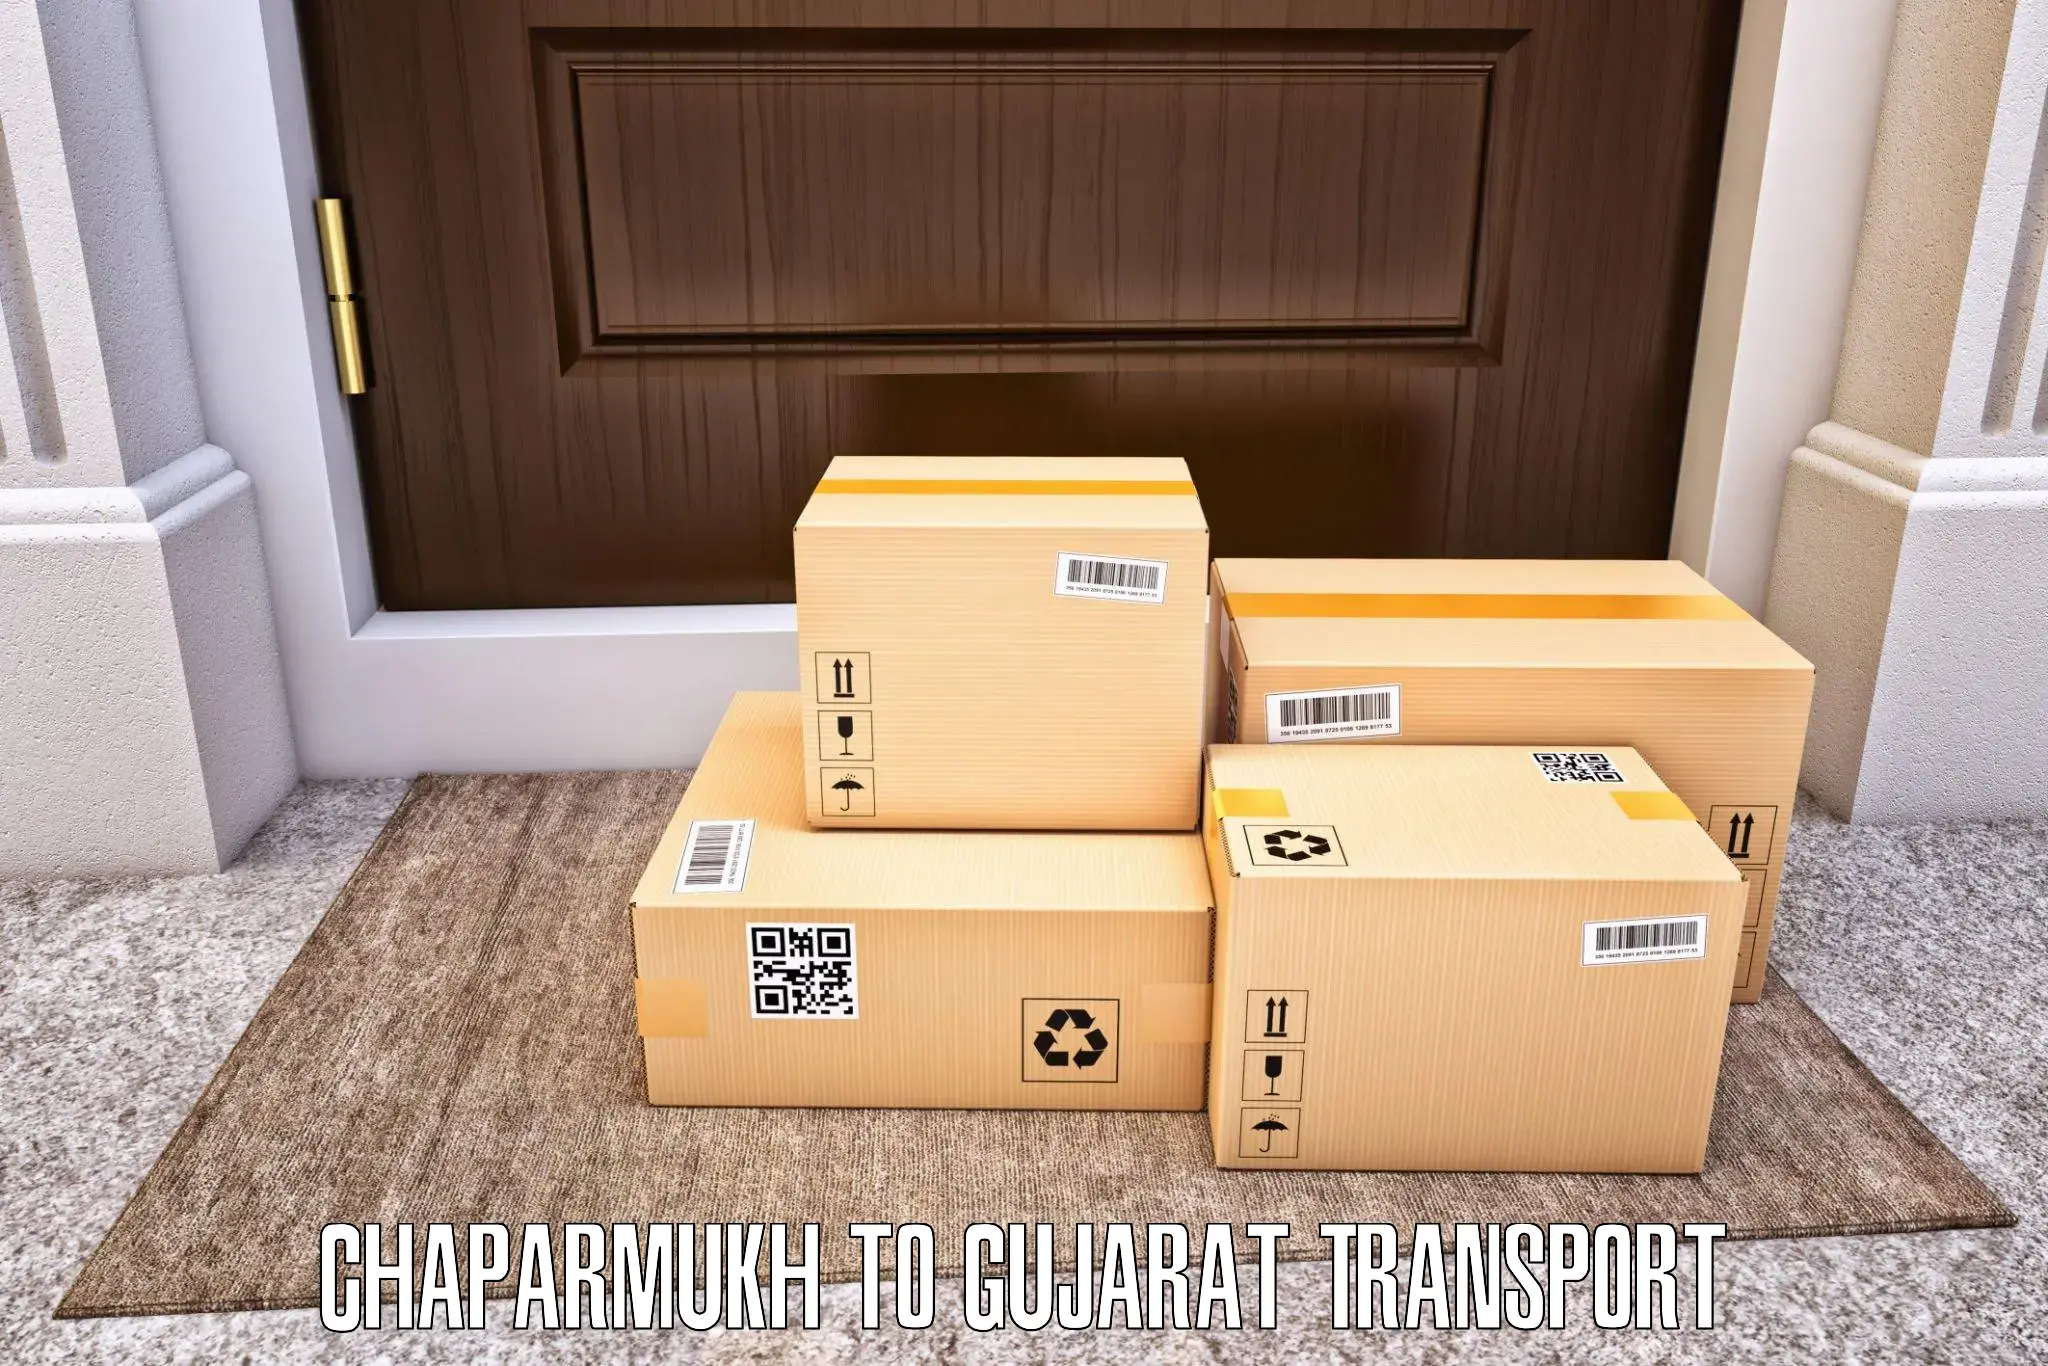 Daily transport service Chaparmukh to Vatadara